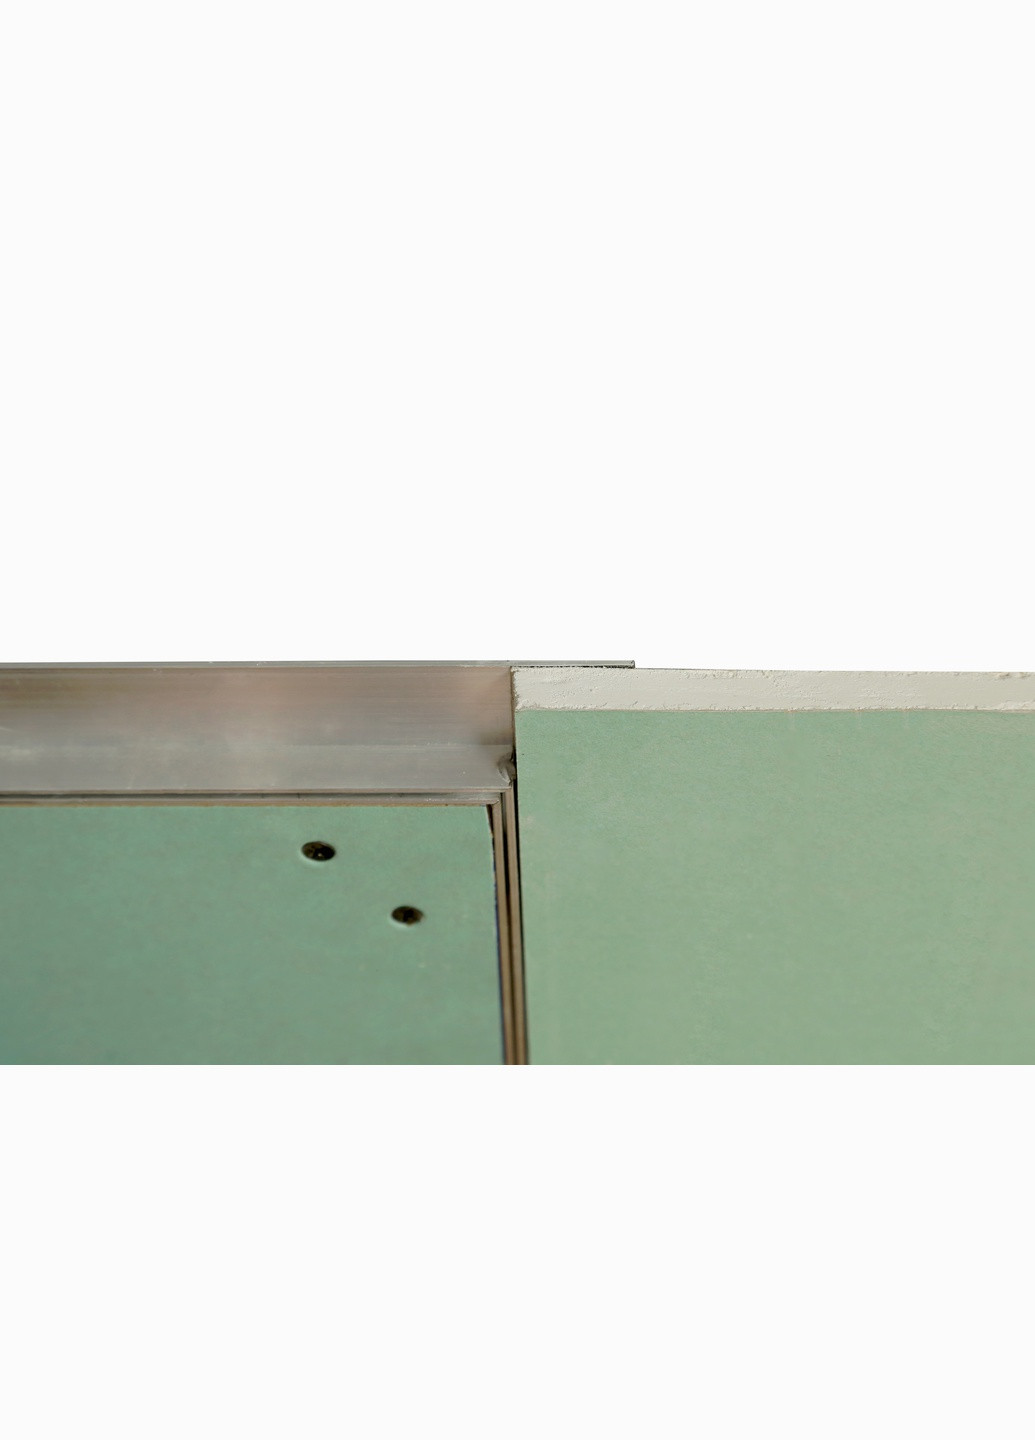 Ревизионный люк скрытого монтажа под покраску (поклейку обоев) типа СТАНДАРТ 500x1100 (1411) S-Dom (264209616)